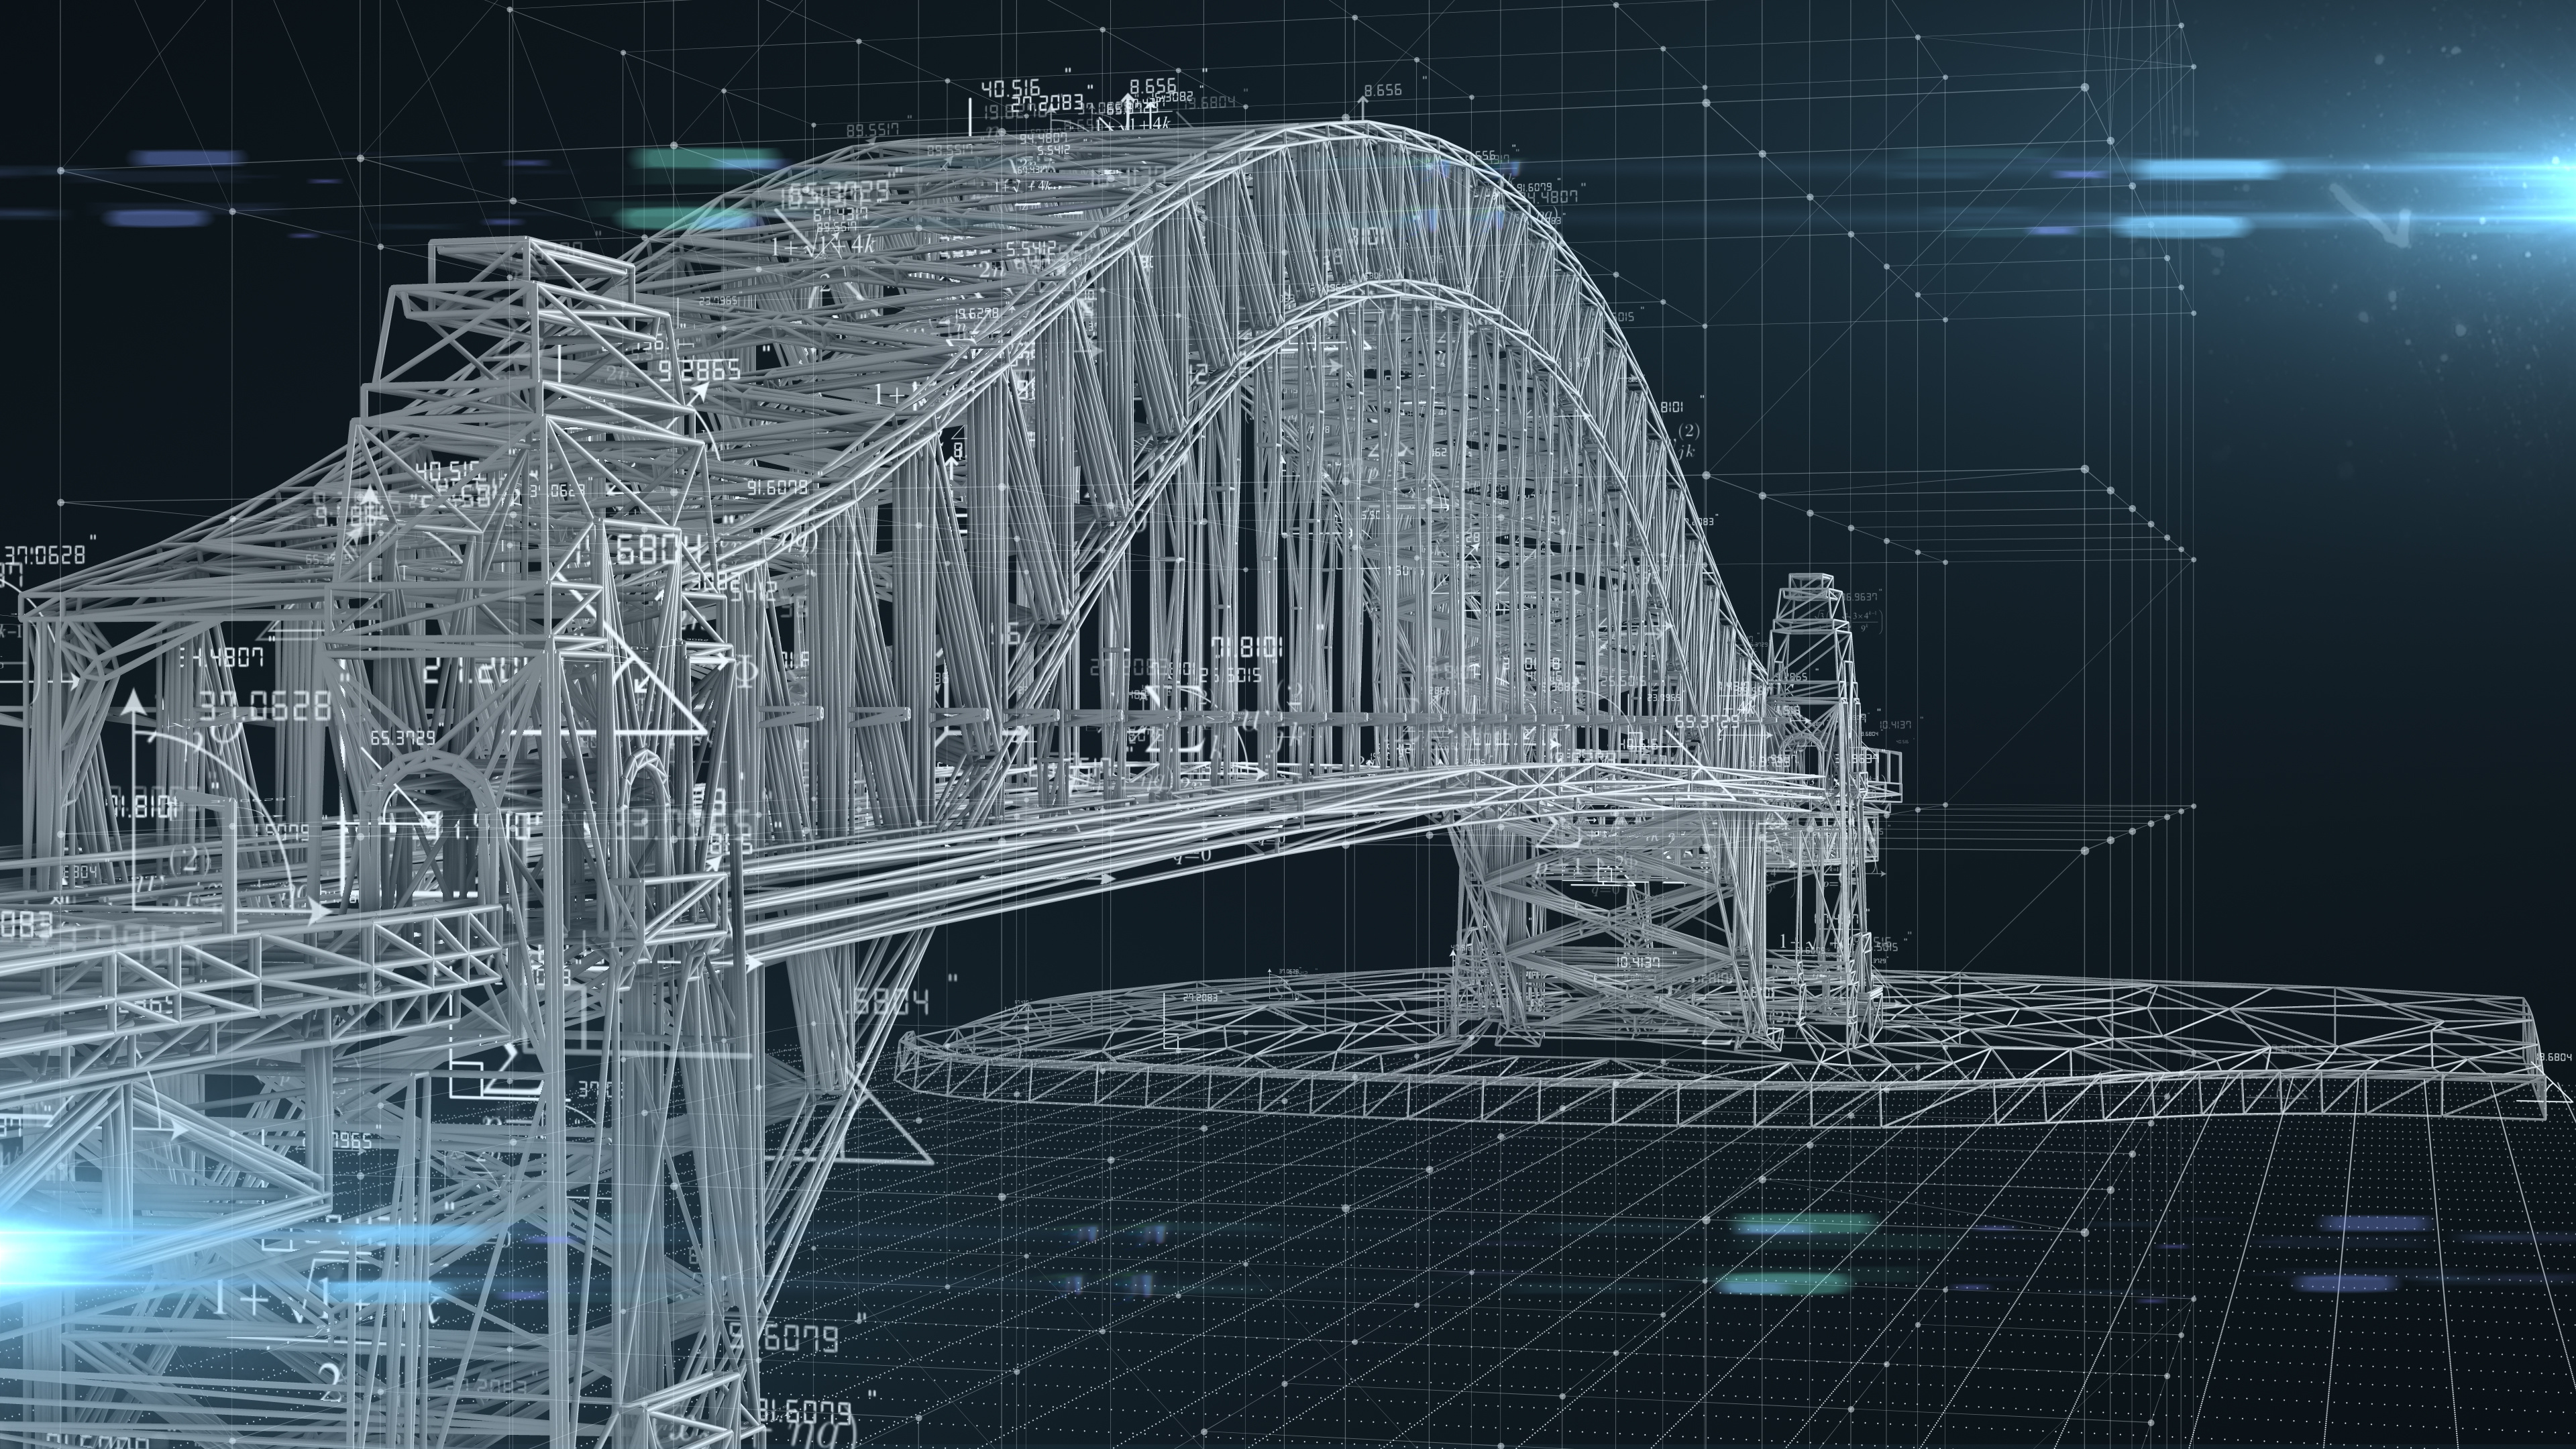 Engineering structures. Civil Engineering structures. Техника мост. Строительство в 3-d формате. 3d Printing Civil Engineering.